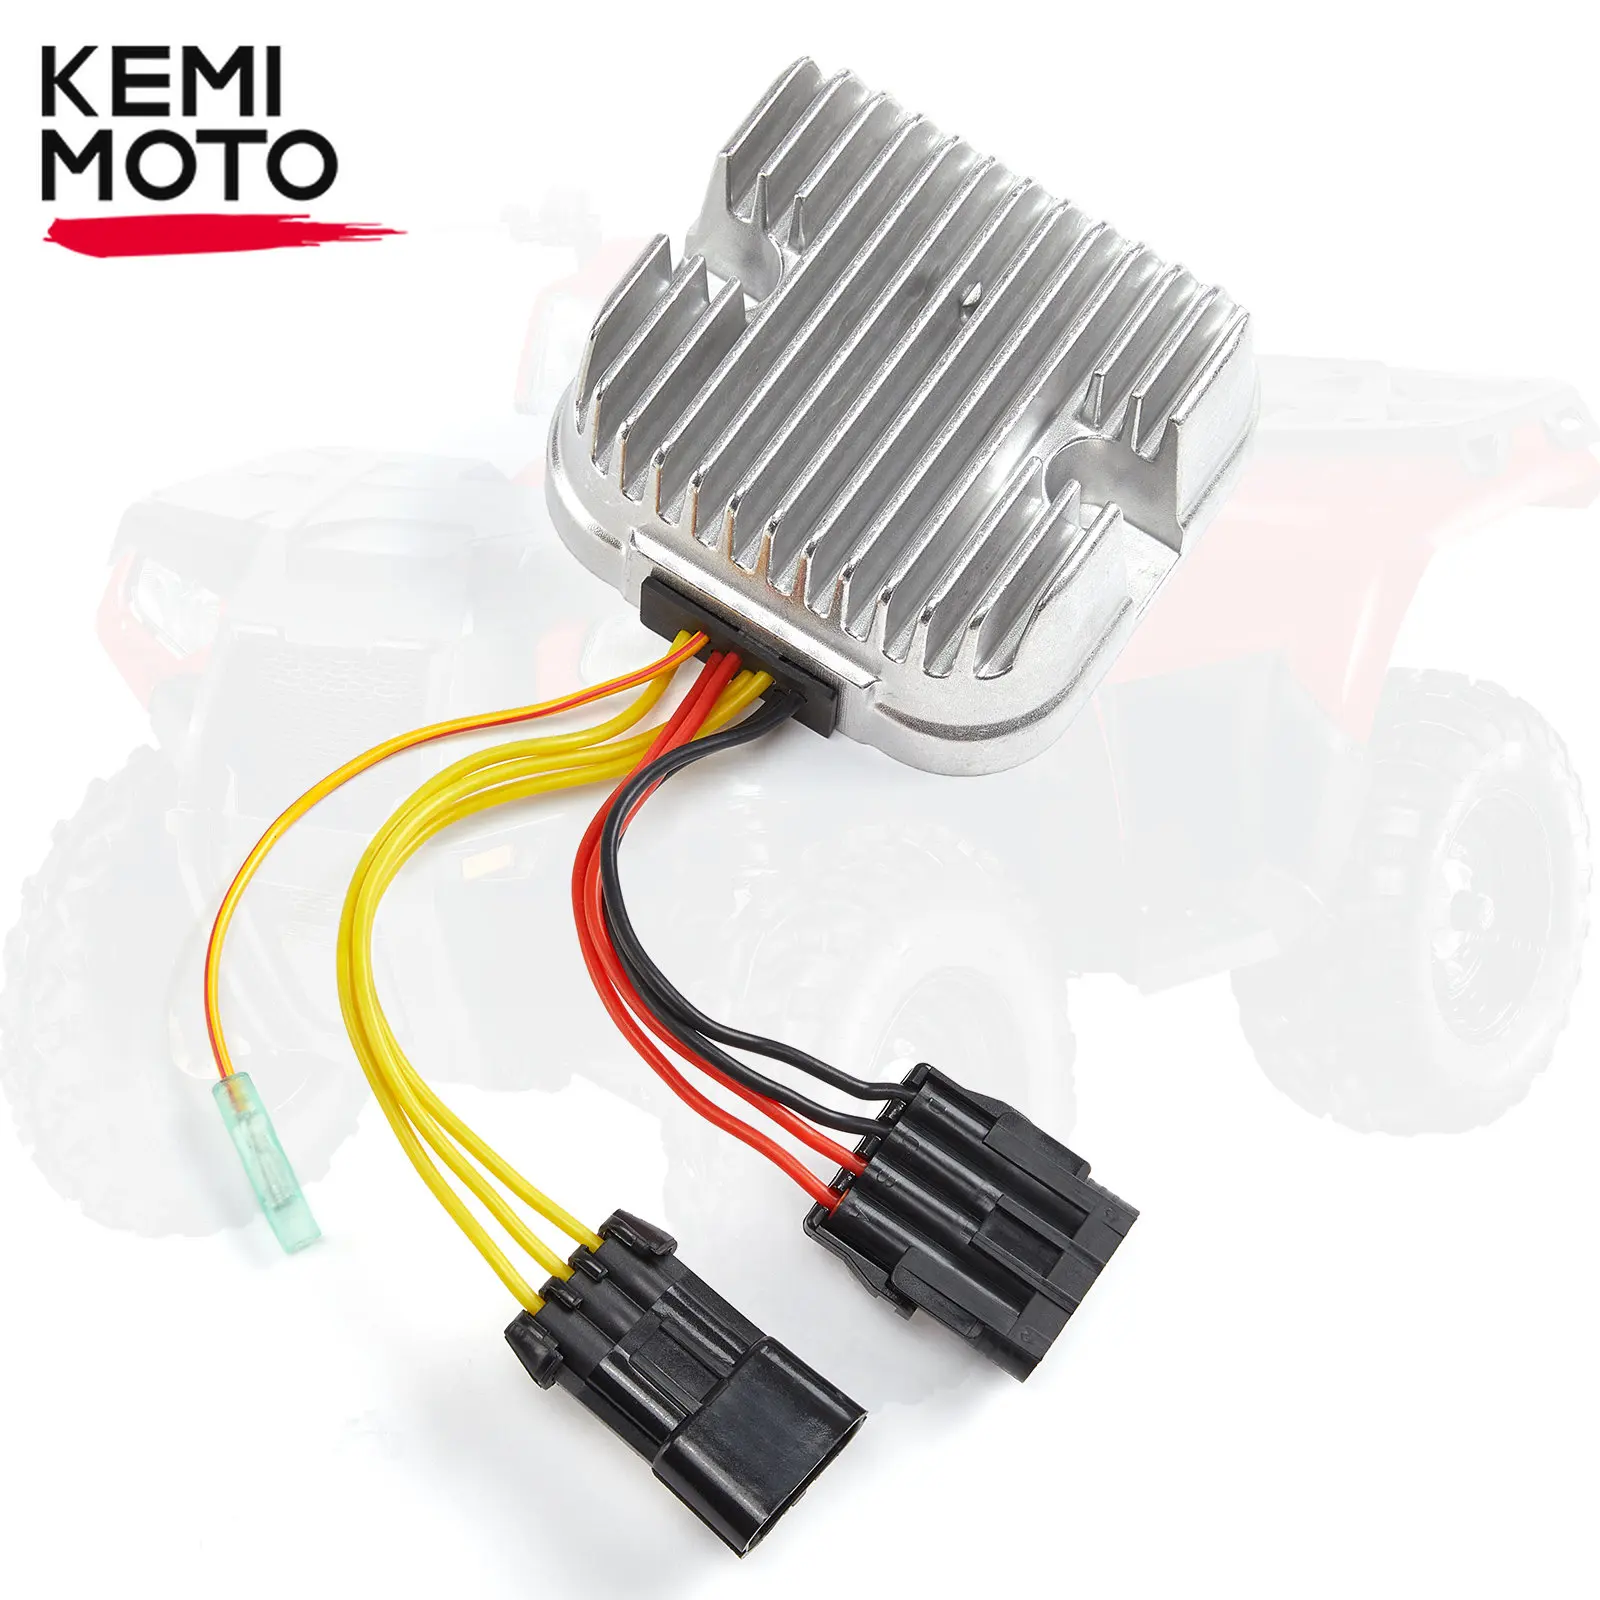 KEMIMOTO ATV UTV Voltage Regulator Rectifier 4012748 Compatible with Polaris Ranger 500 800 RZR 800 Sportsman 500 800 2010-2014